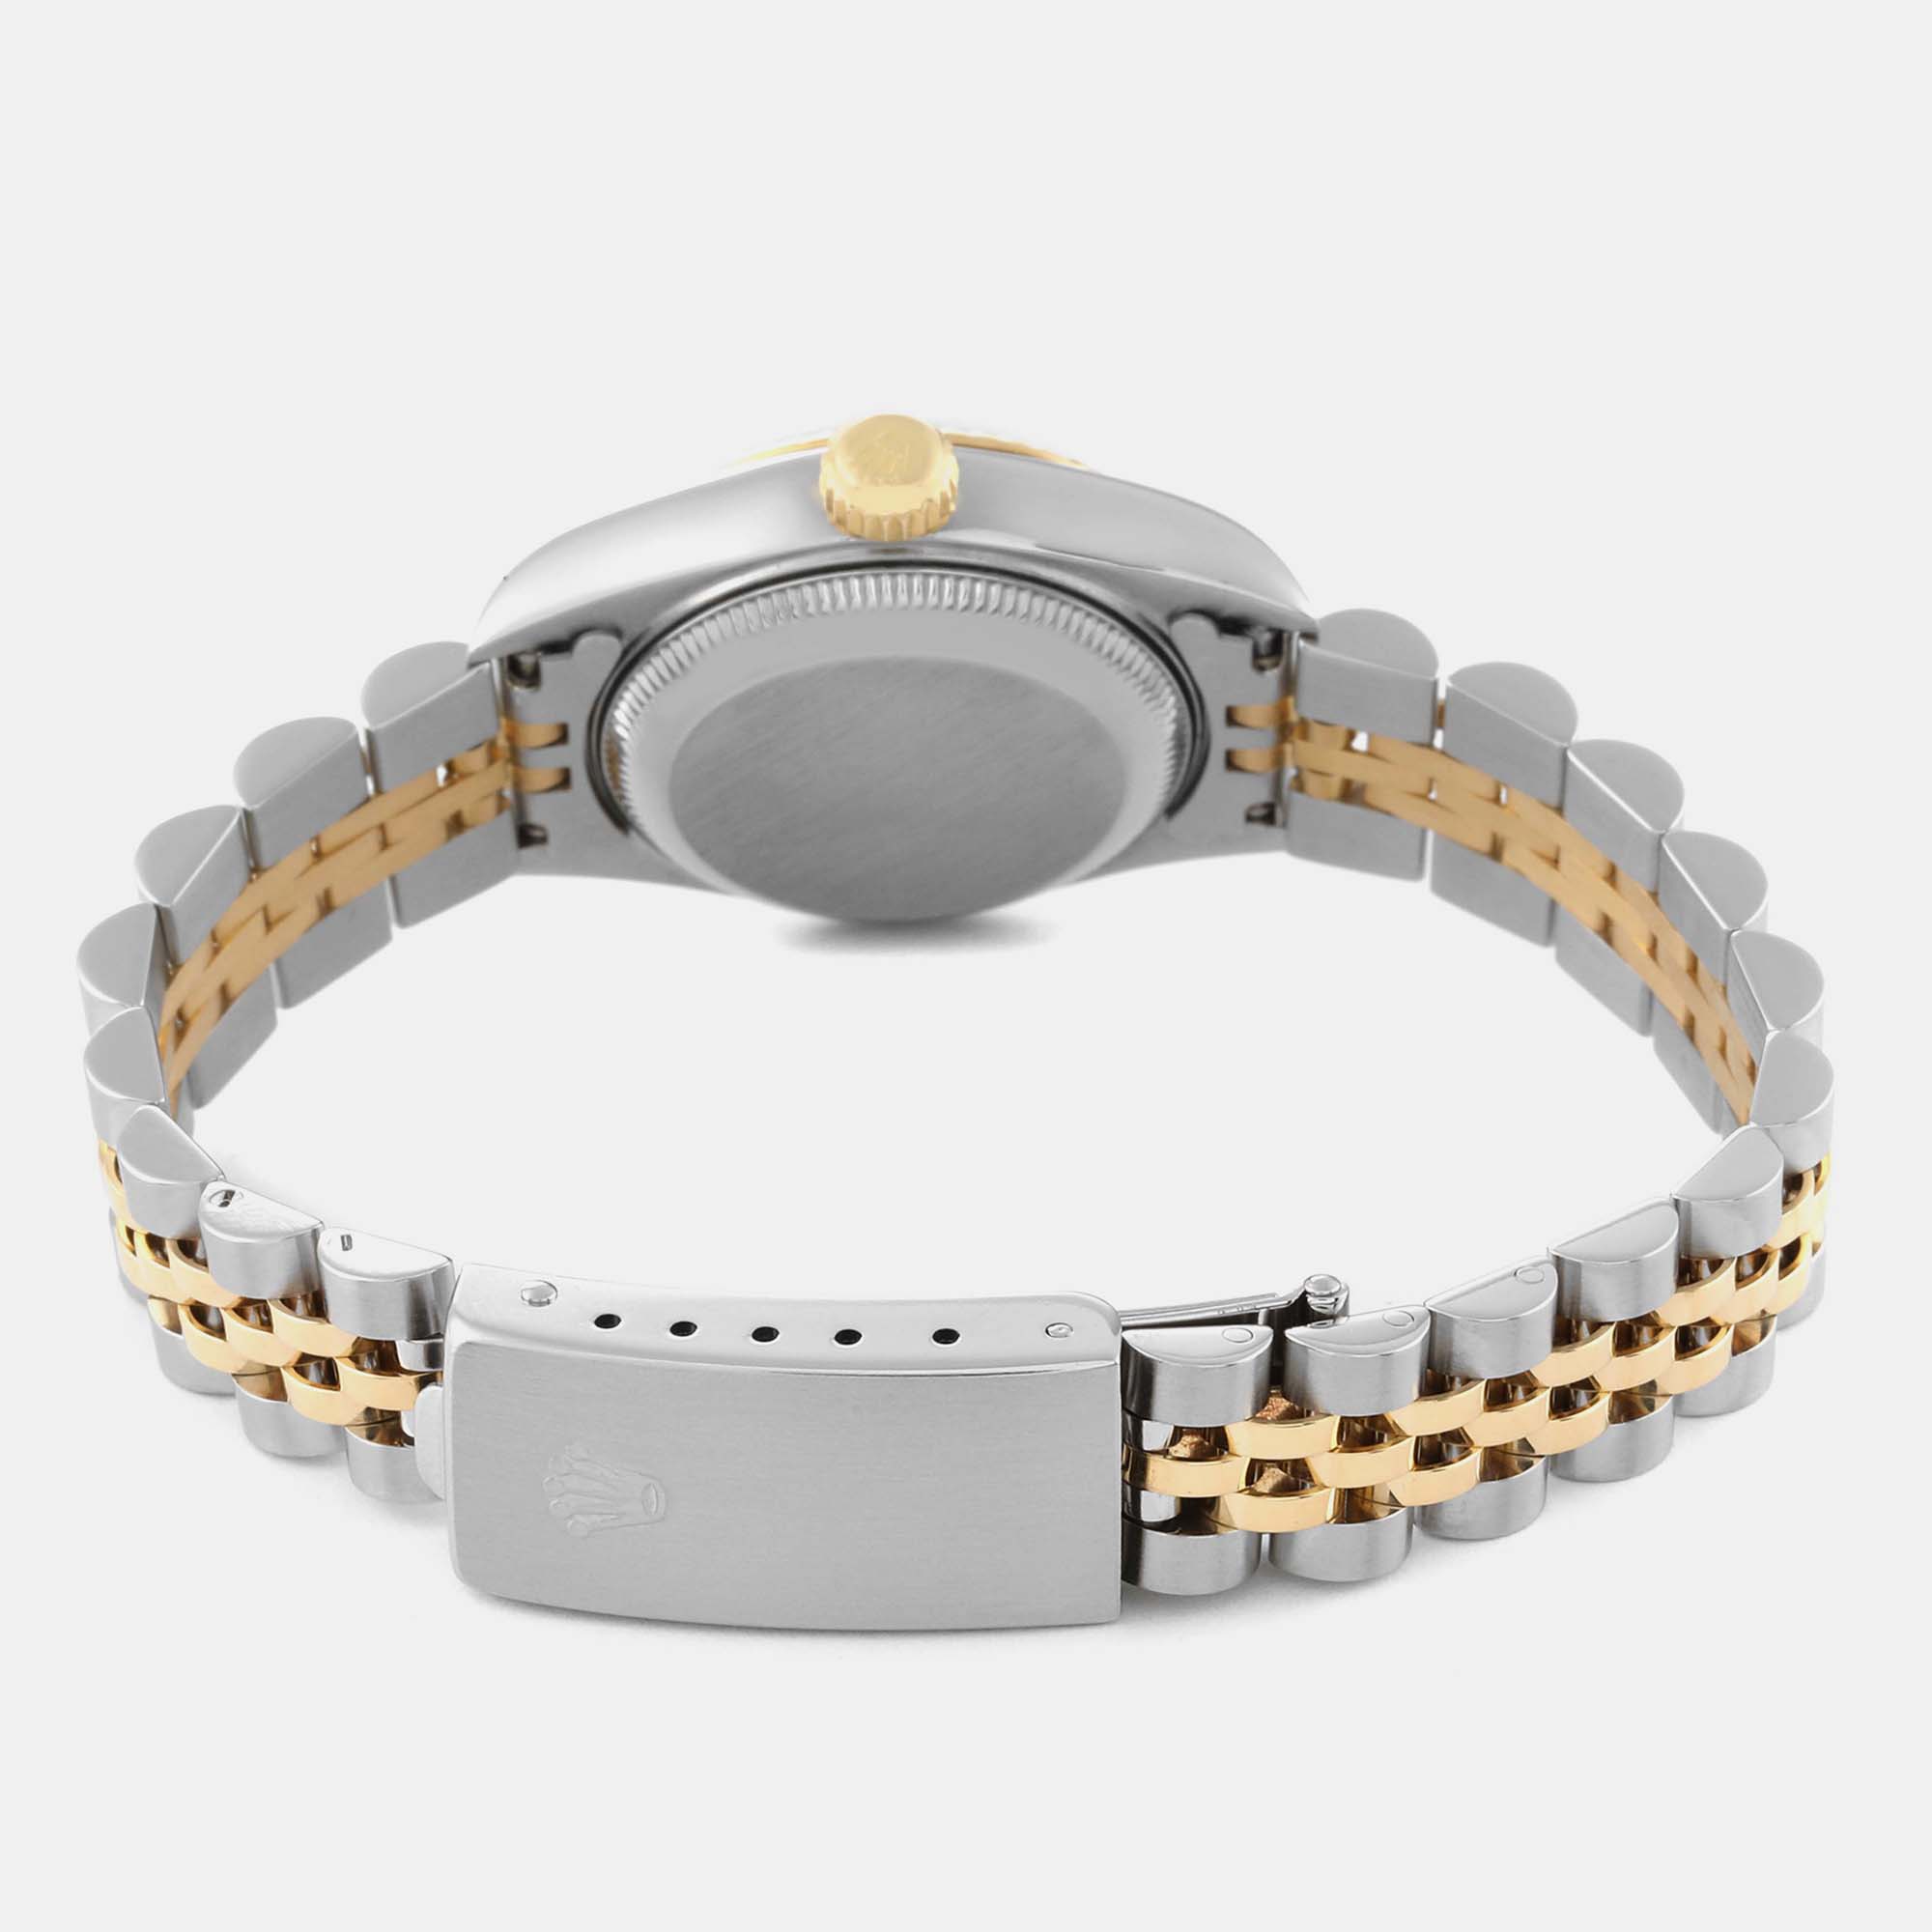 Rolex Datejust Steel Yellow Gold Anniversary Diamond Dial Ladies Watch 79173 26 Mm